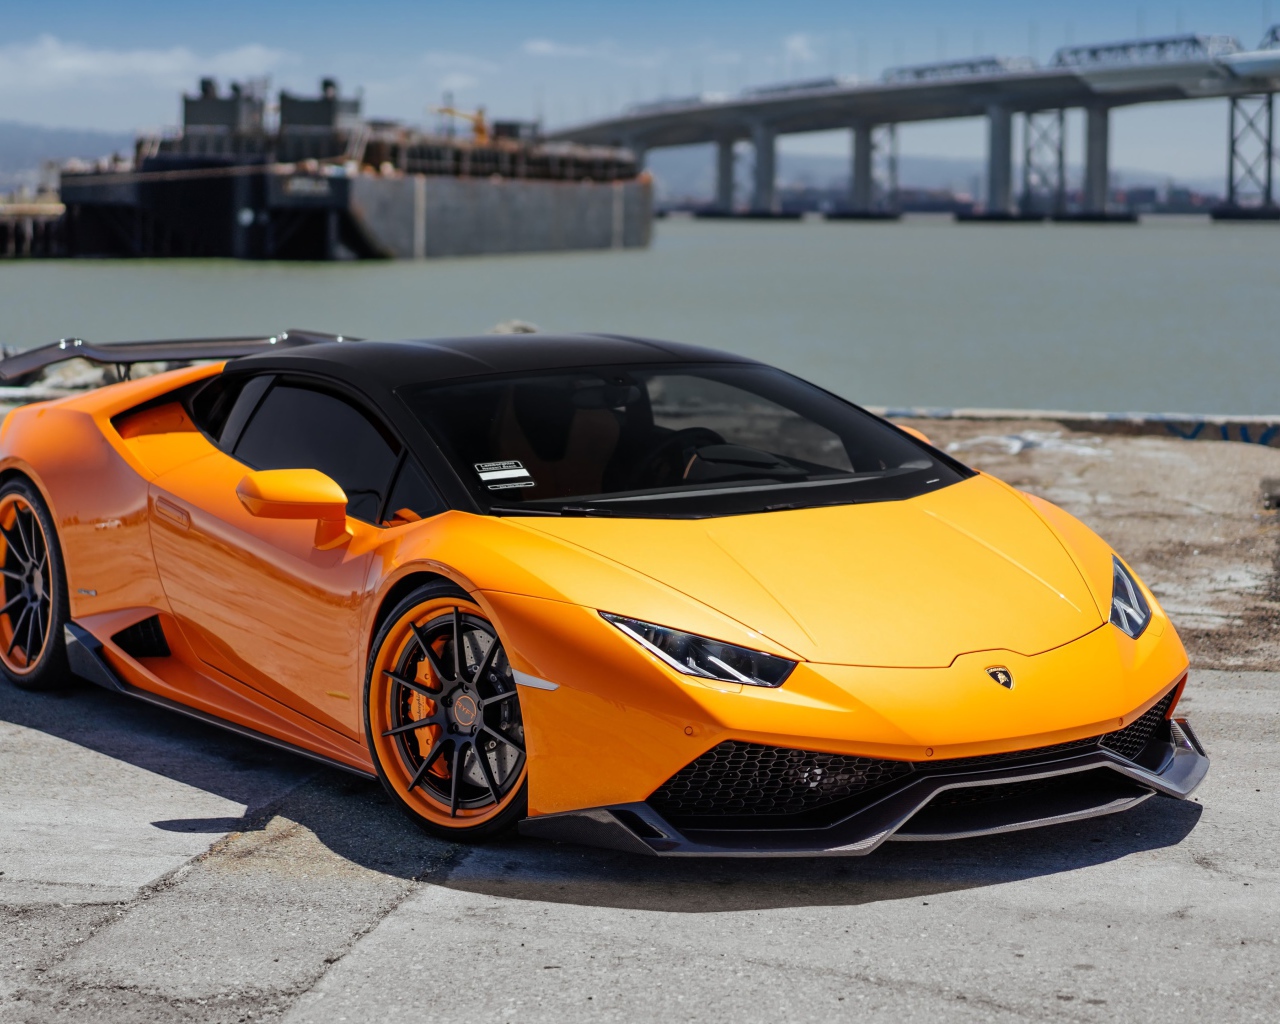 Оранжевый быстрый Lamborghini Huracan в порту у воды